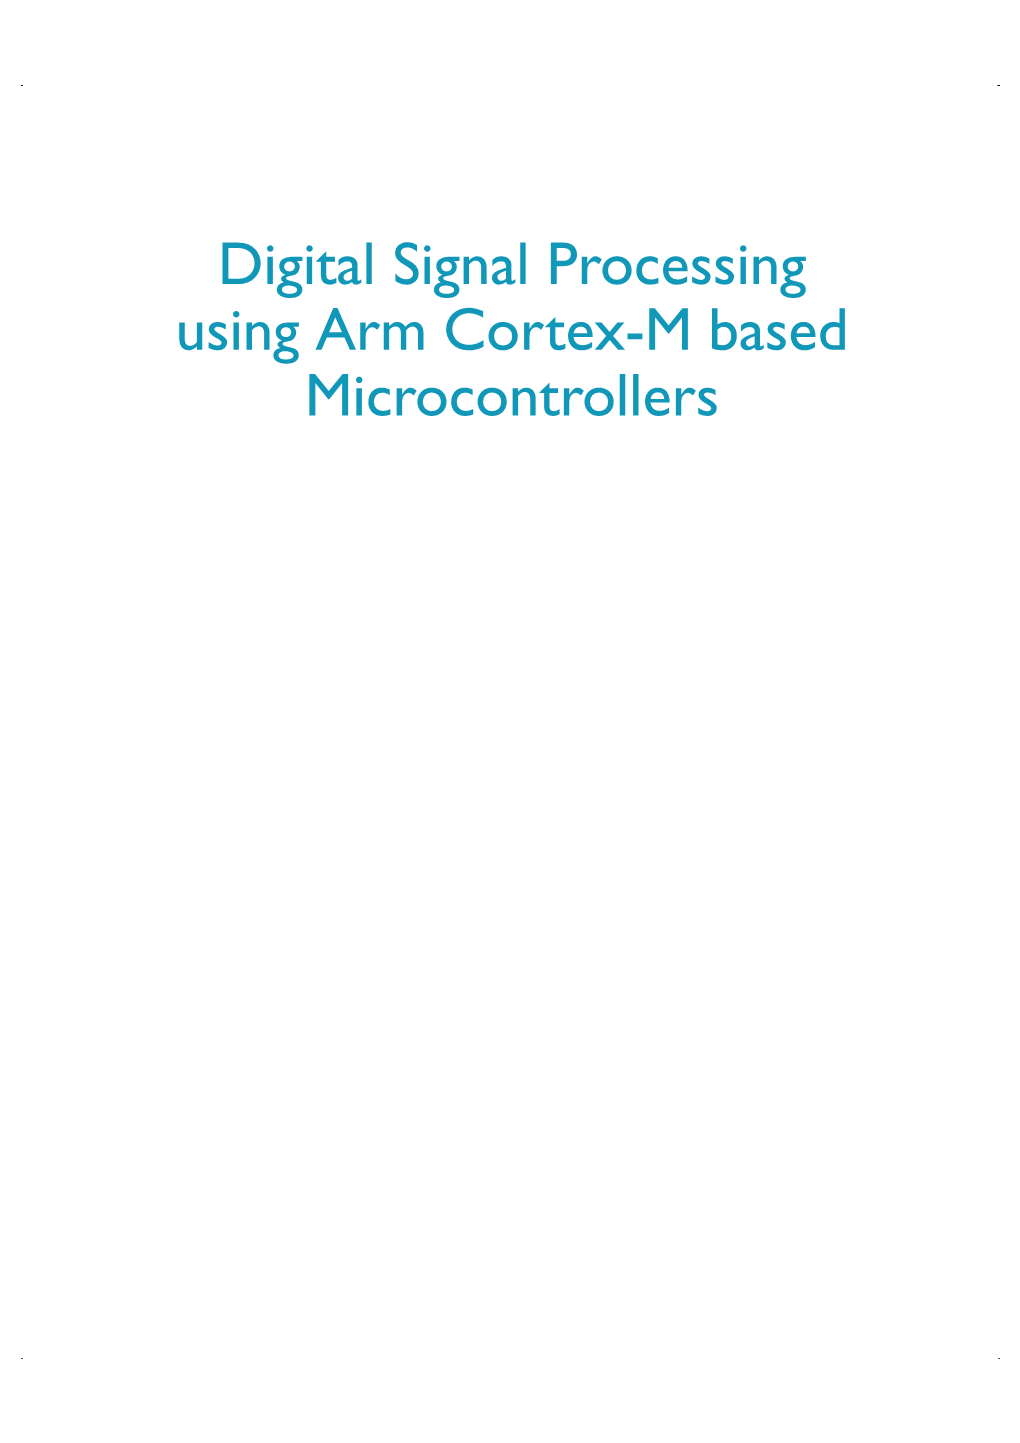 Digital Signal Processing Using Arm Cortex-M Based Microcontrollers